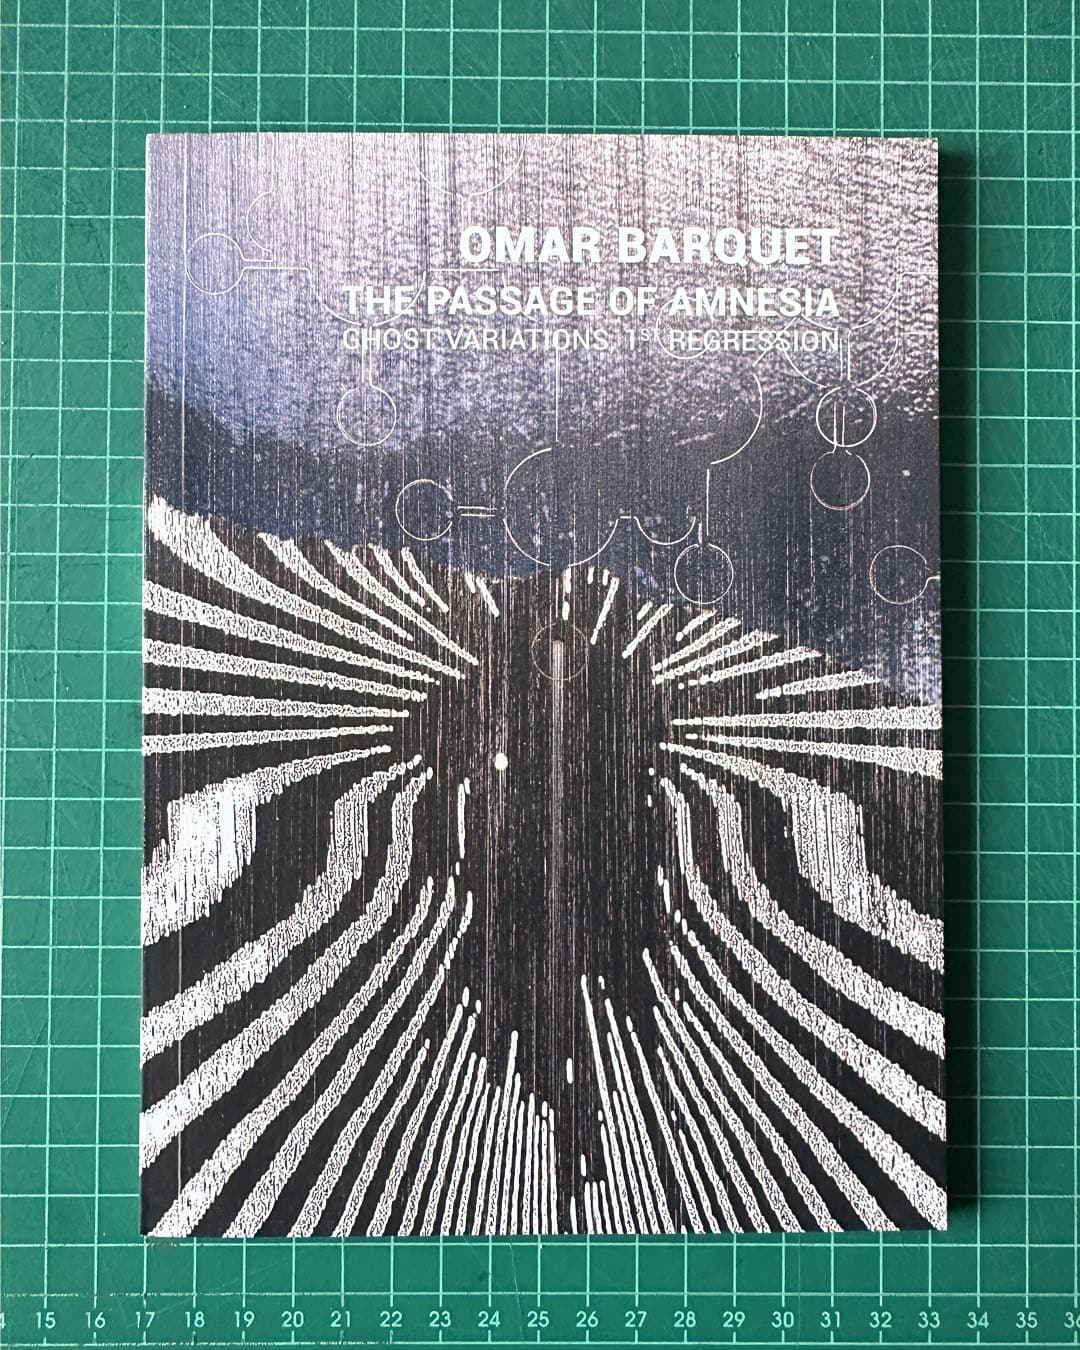 Weird Bookshelf: Omar Barquet. The Passage of Amnesia. Ghost